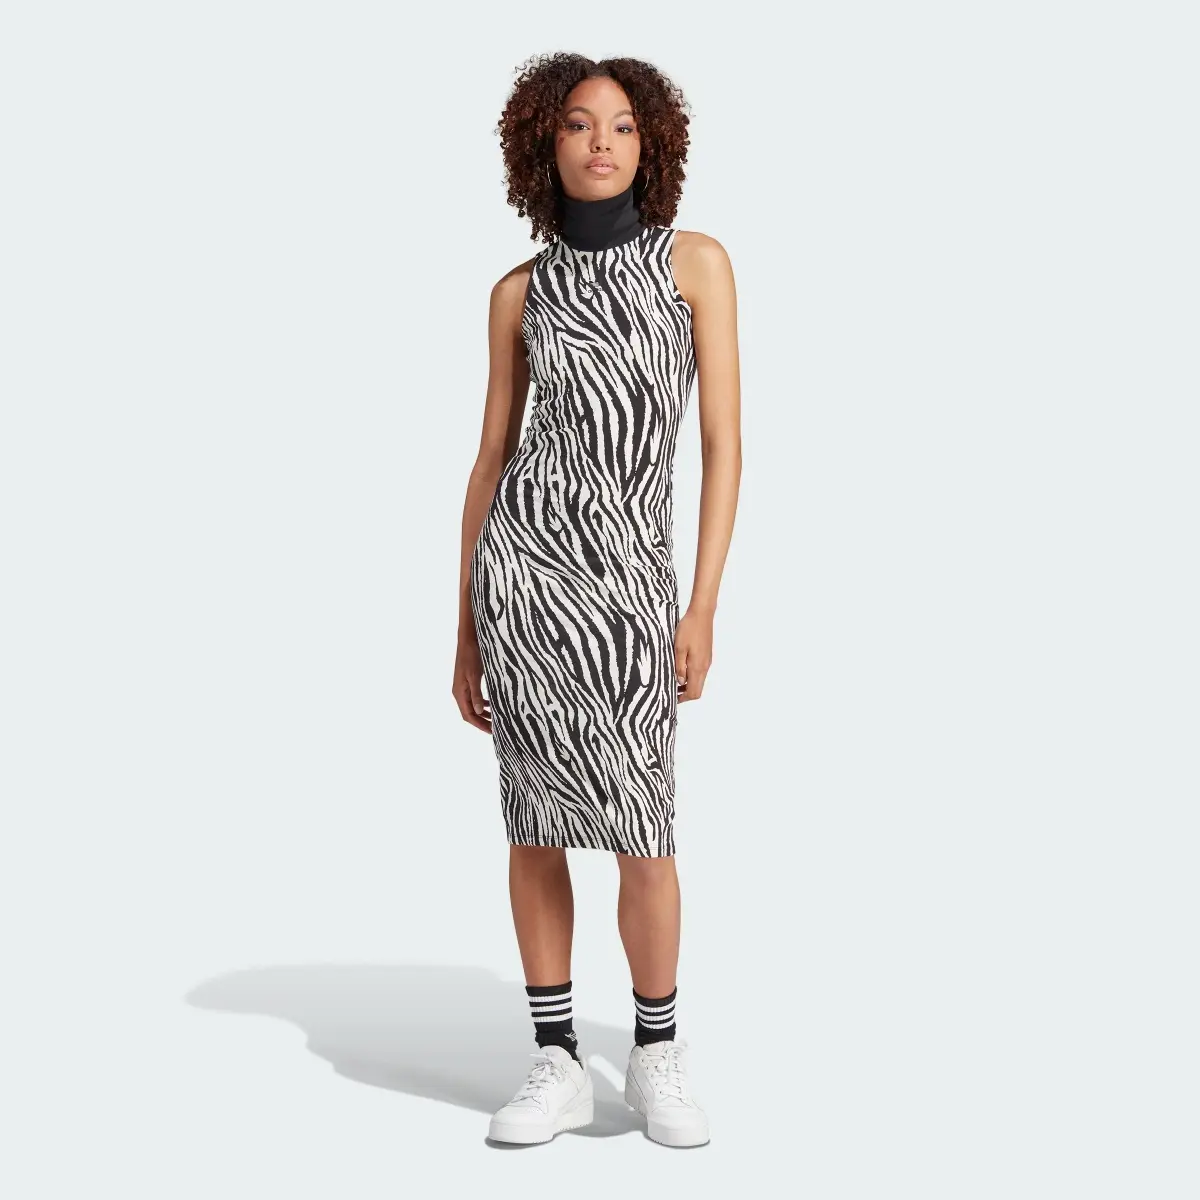 Adidas Sukienka Allover Zebra Animal Print. 2